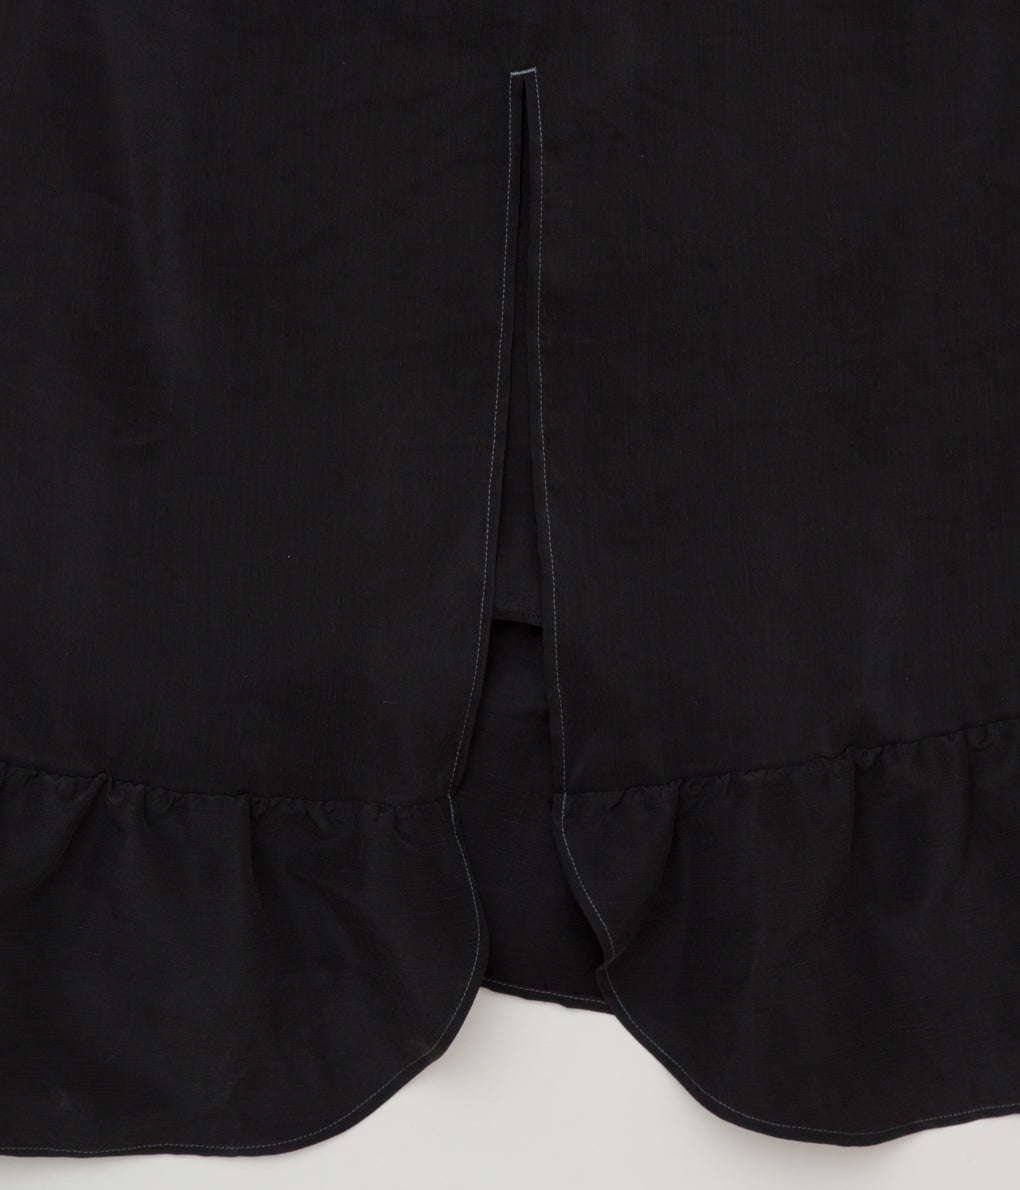 PHOTOCOPIEU "ARIA - OPEN BACK DRESS"(BLACK)